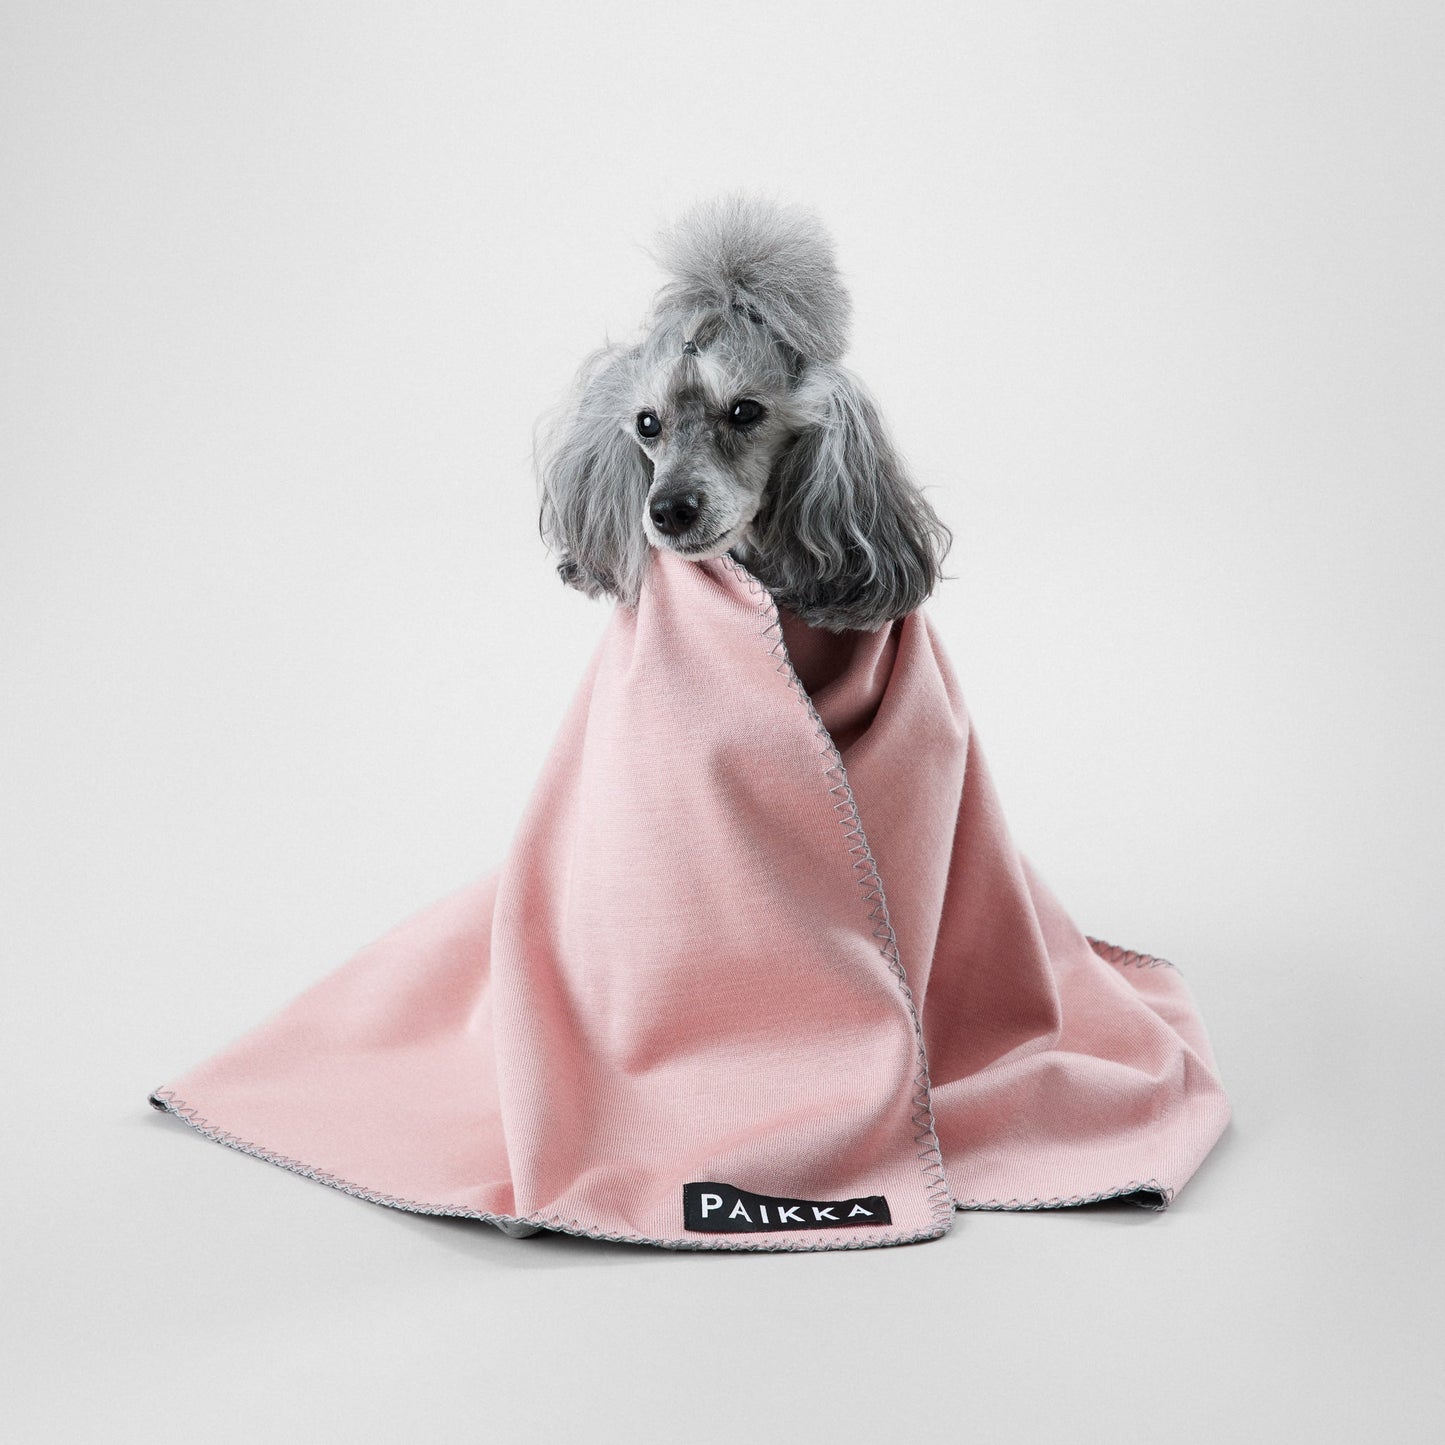 PAiKKA | Decke zur Erholung PiNK | Recovery Blanket for Pets pink/grey